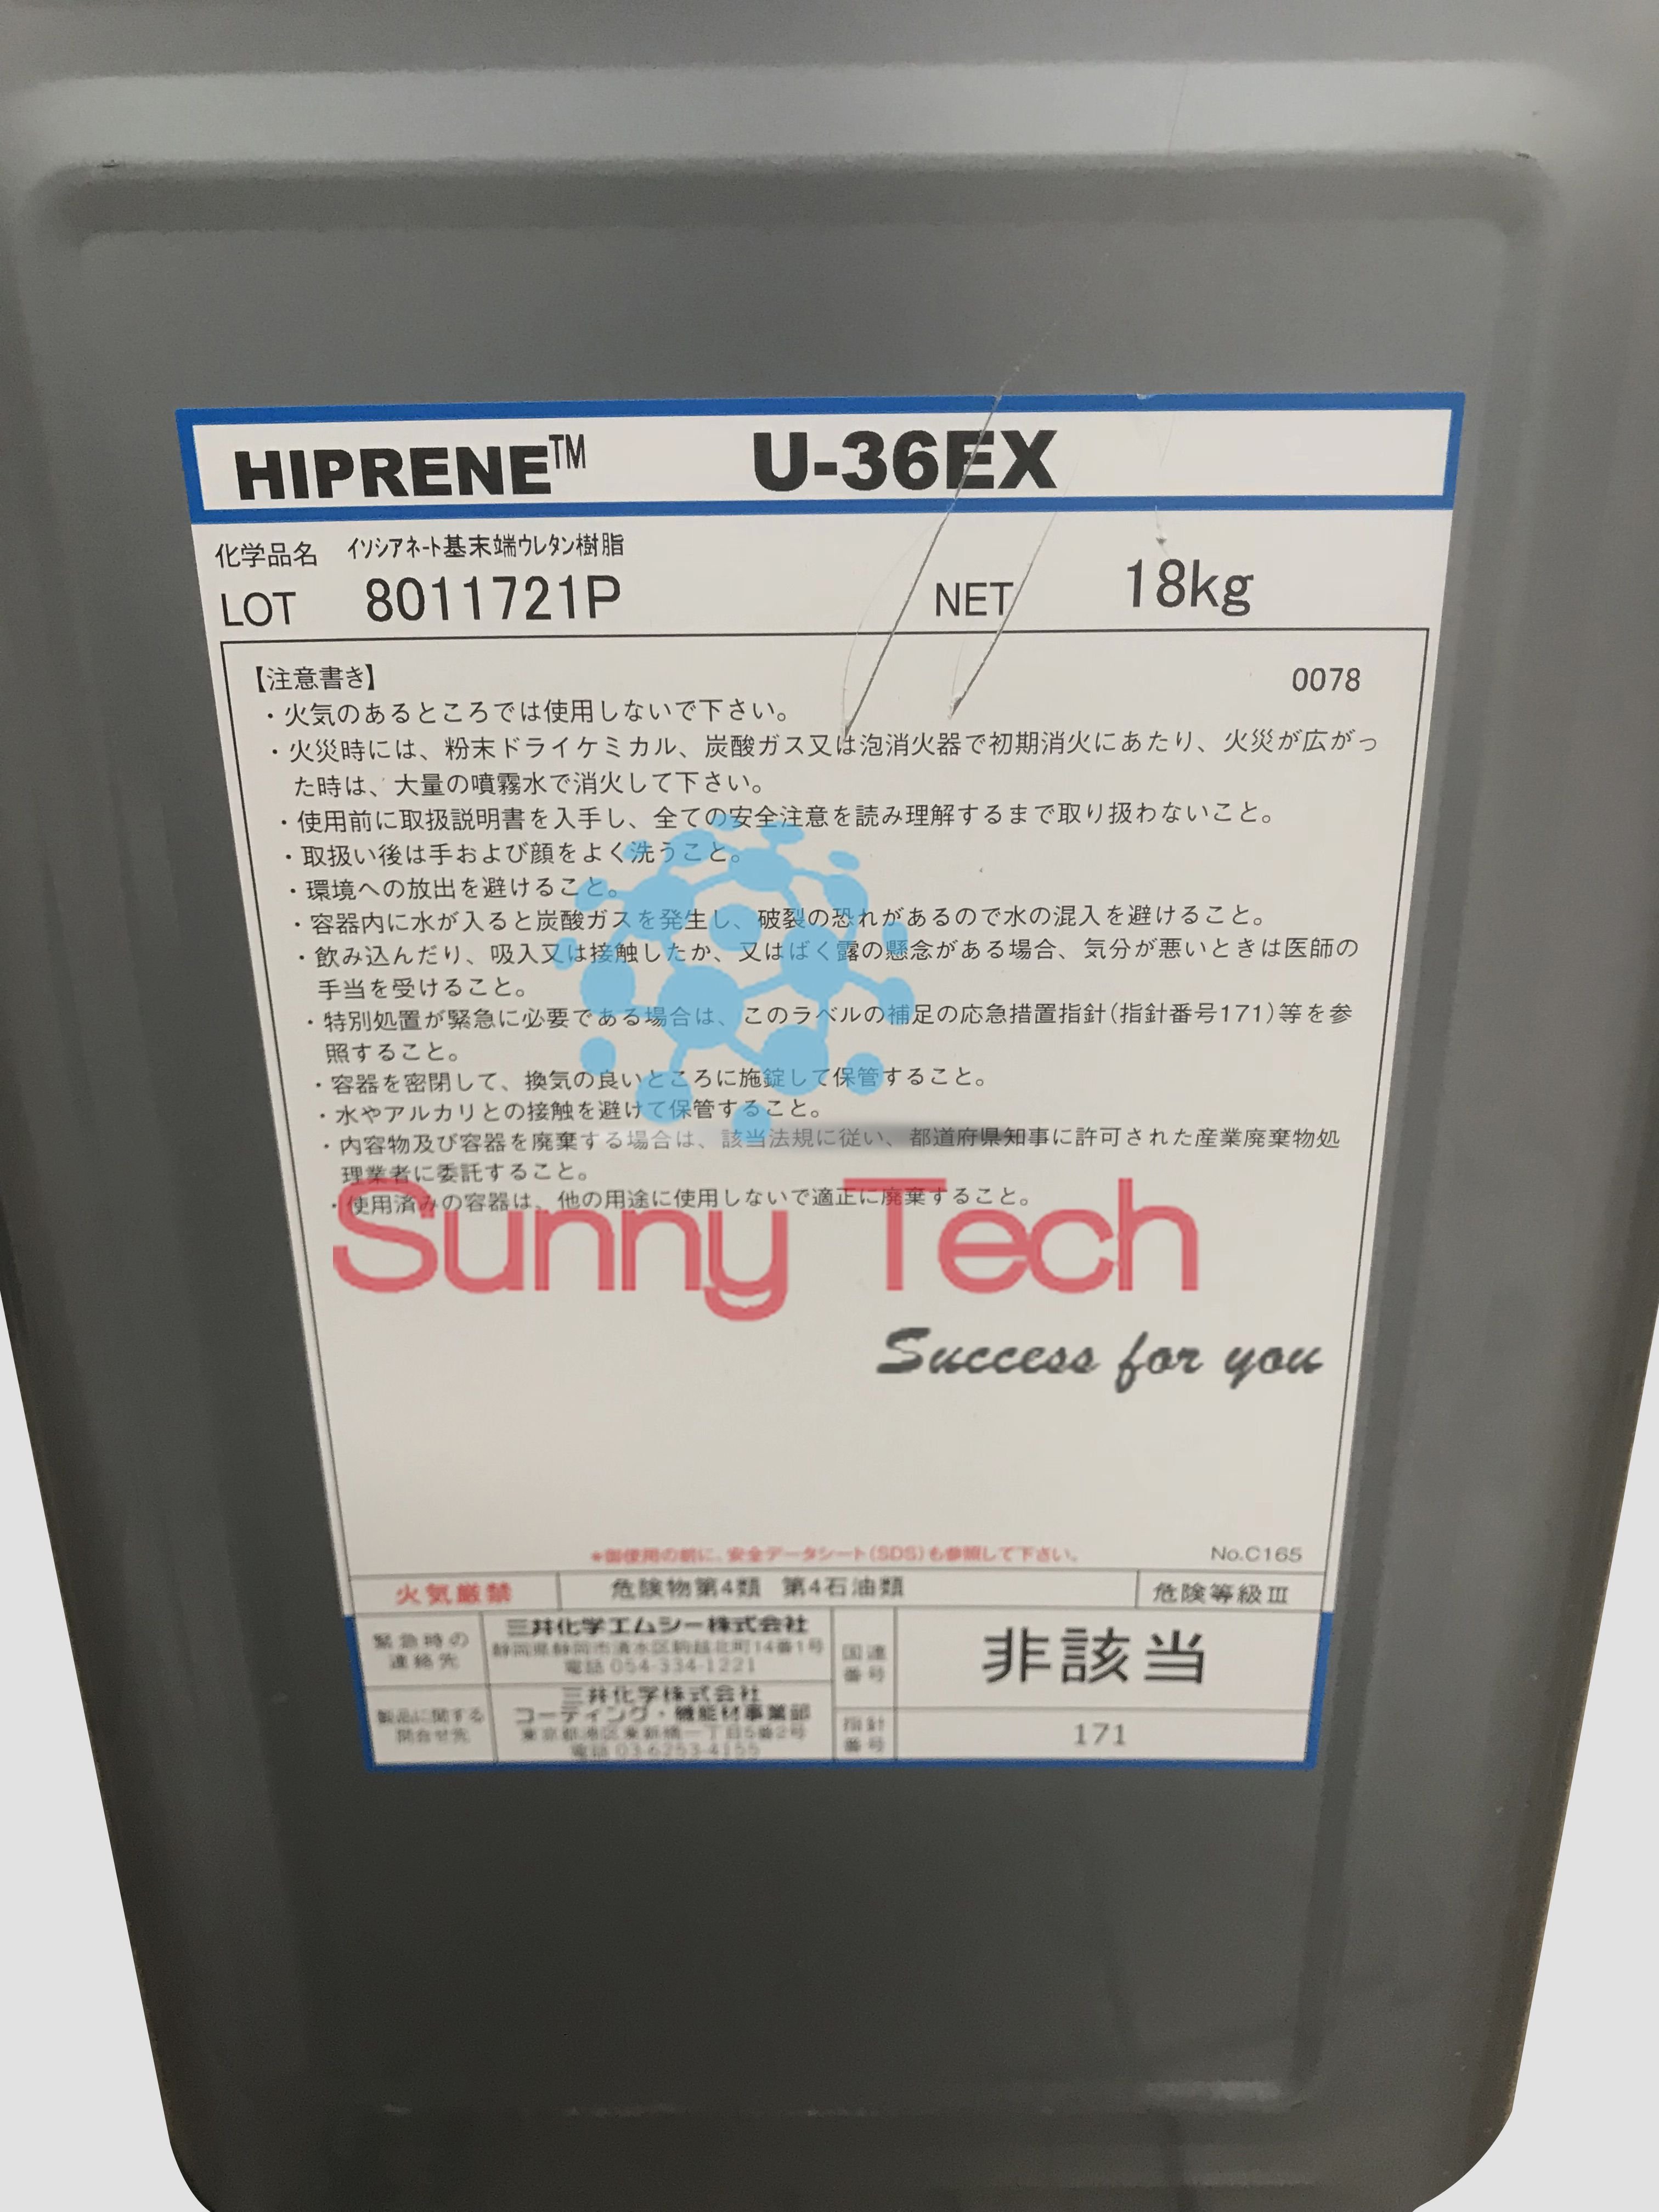 HIPRENETM U-36 - Hóa Chất Cao Su Sunny Tech - Công Ty TNHH Sunny Tech